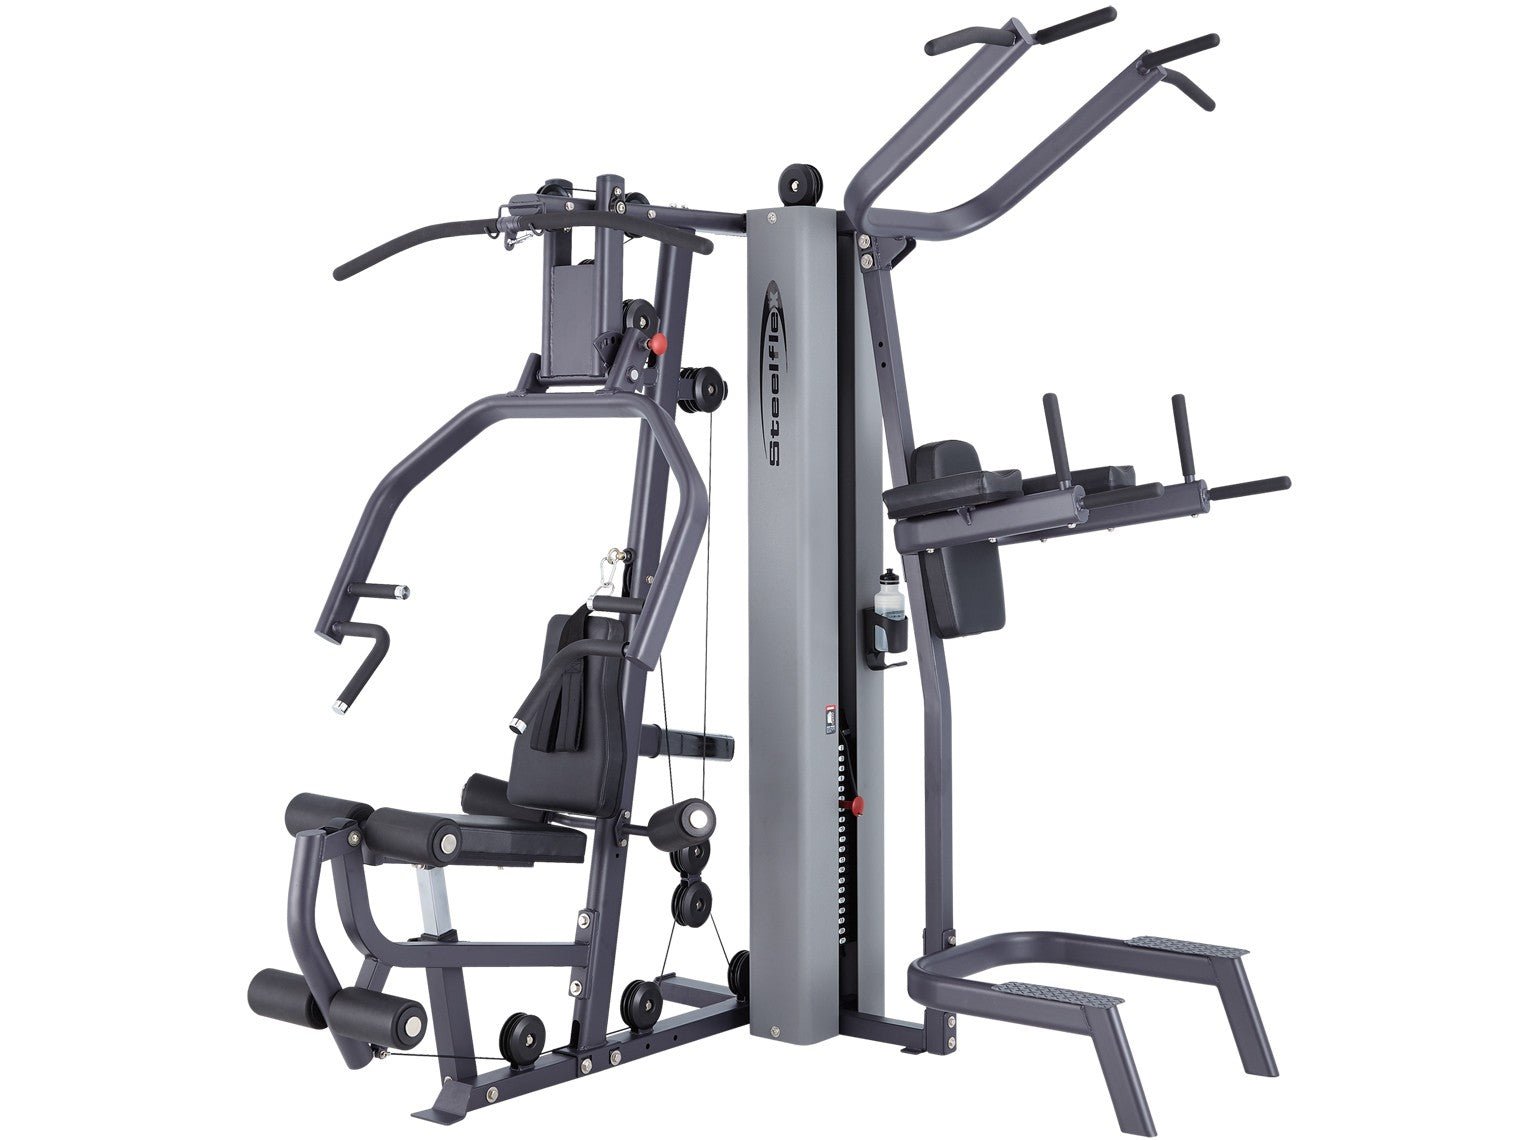 Steelflex MG100B Multi Gym Training System Weight Machine - Upzy.com